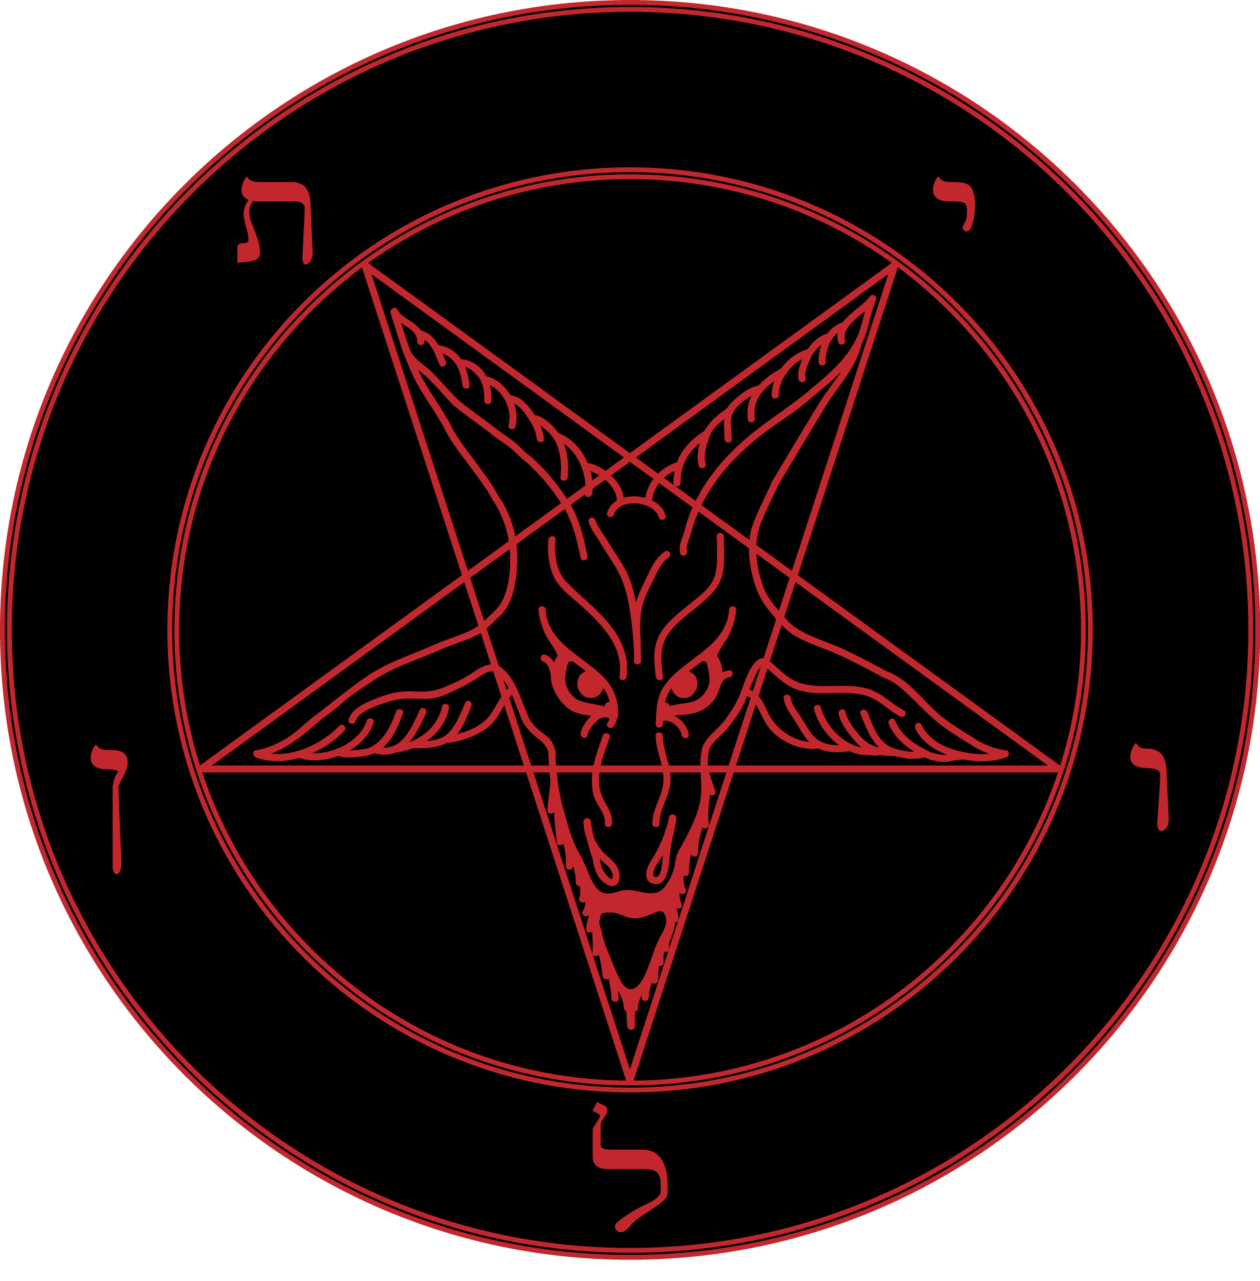 The Sigil of Baphomet, foremost symbol of modern Satanism. 